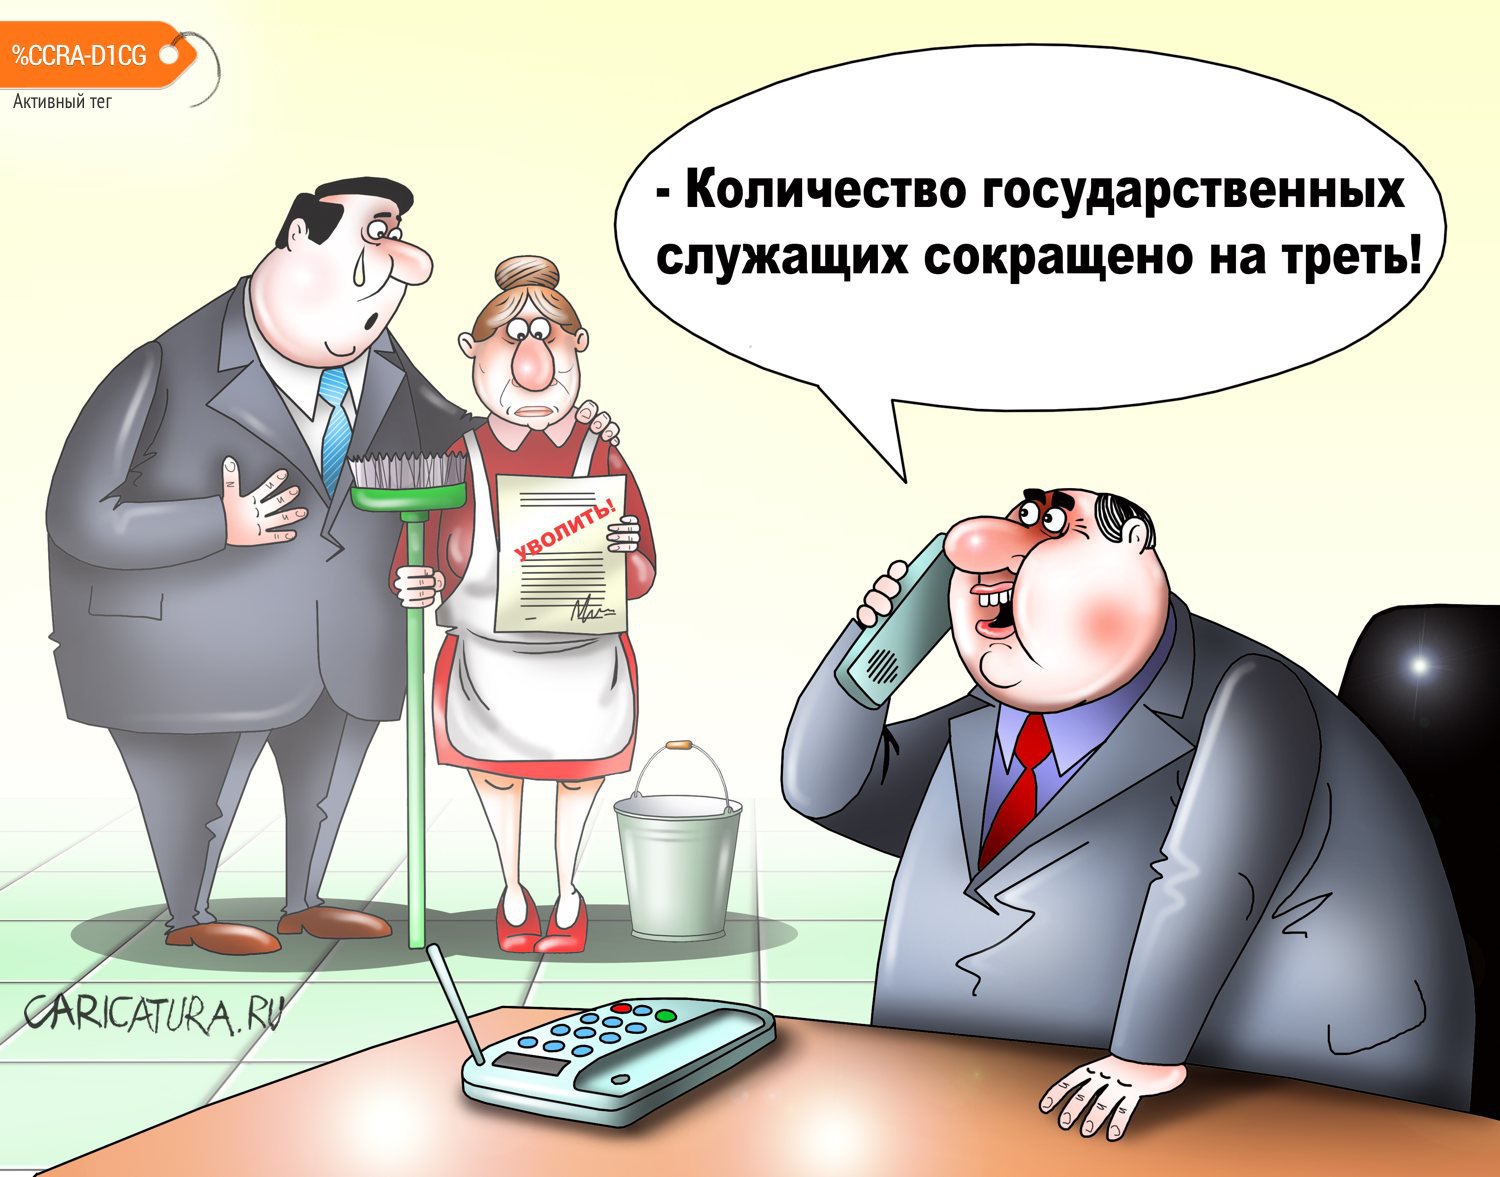 Карикатура "Модернизация аппарата", Сергей Корсун